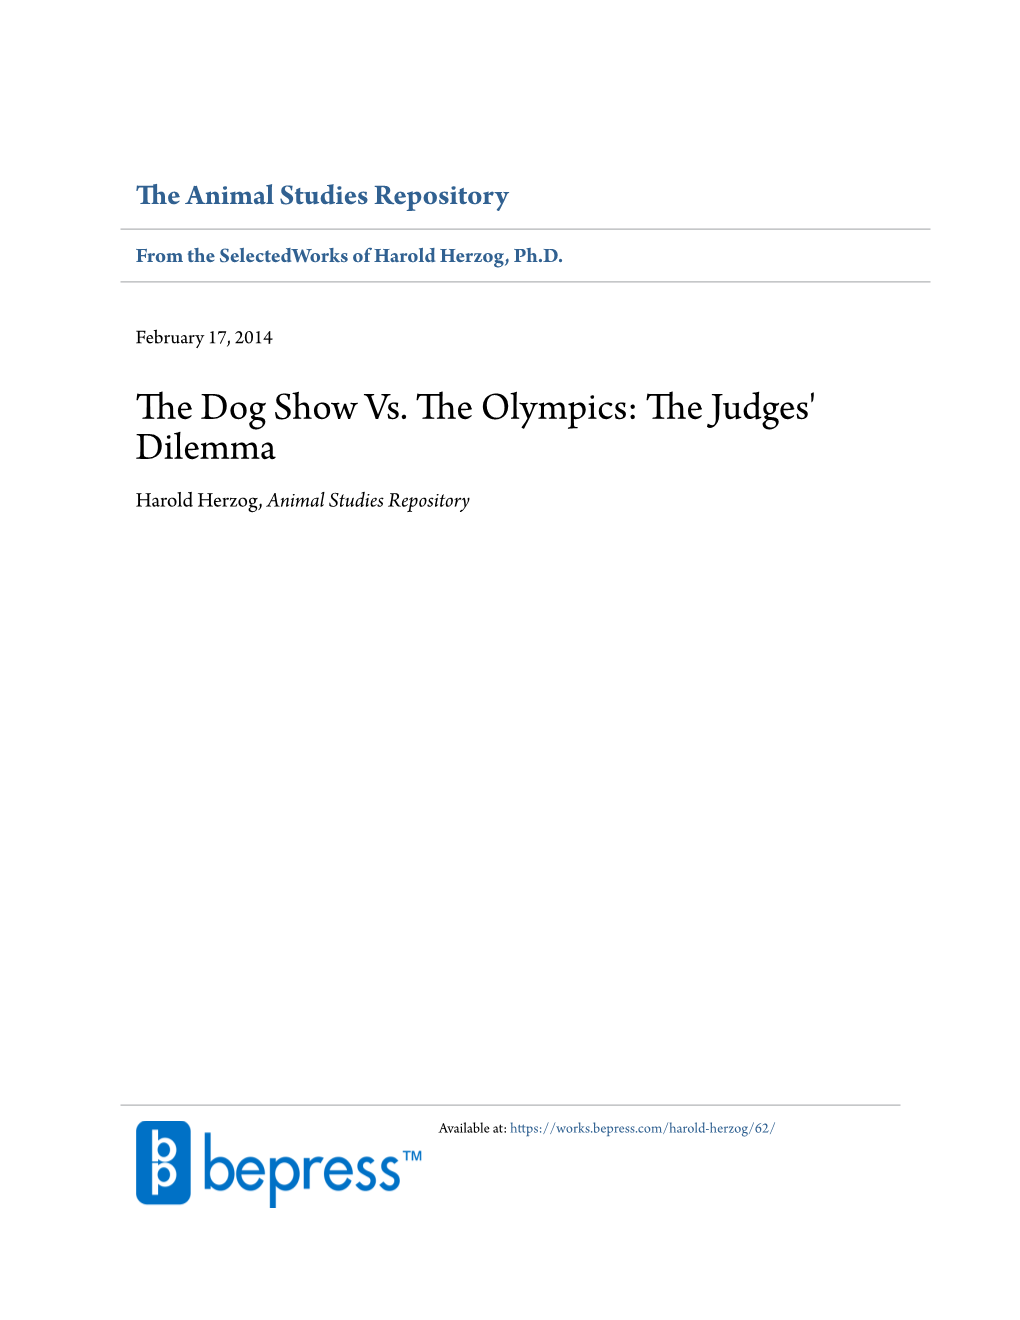 The Dog Show Vs. the Olympics: the Judges' Dilemma